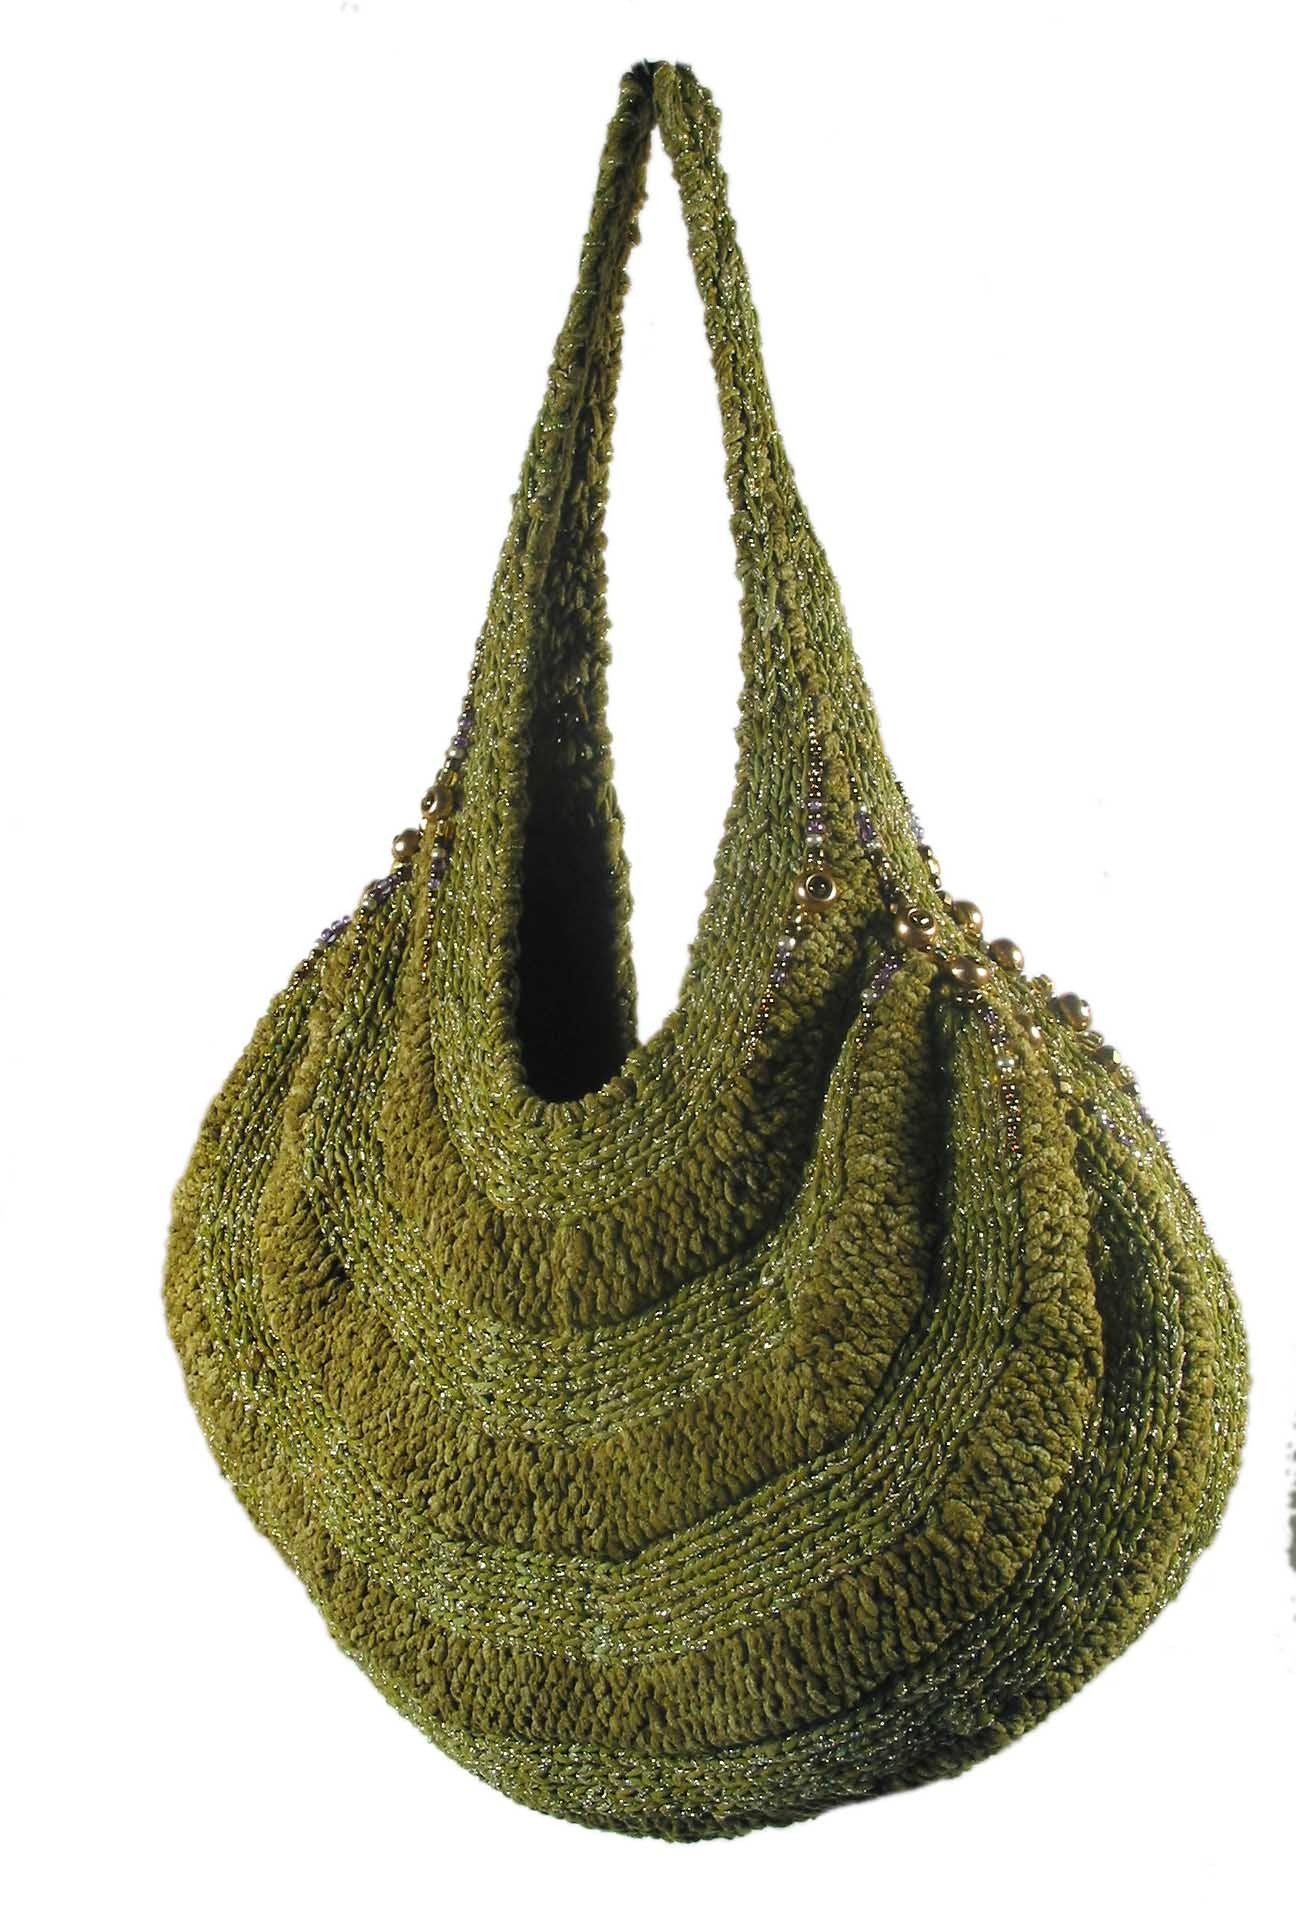 Crochet Hobo Bag Free Pattern Knit And Crochet Pattern Handy Hobo Handbags